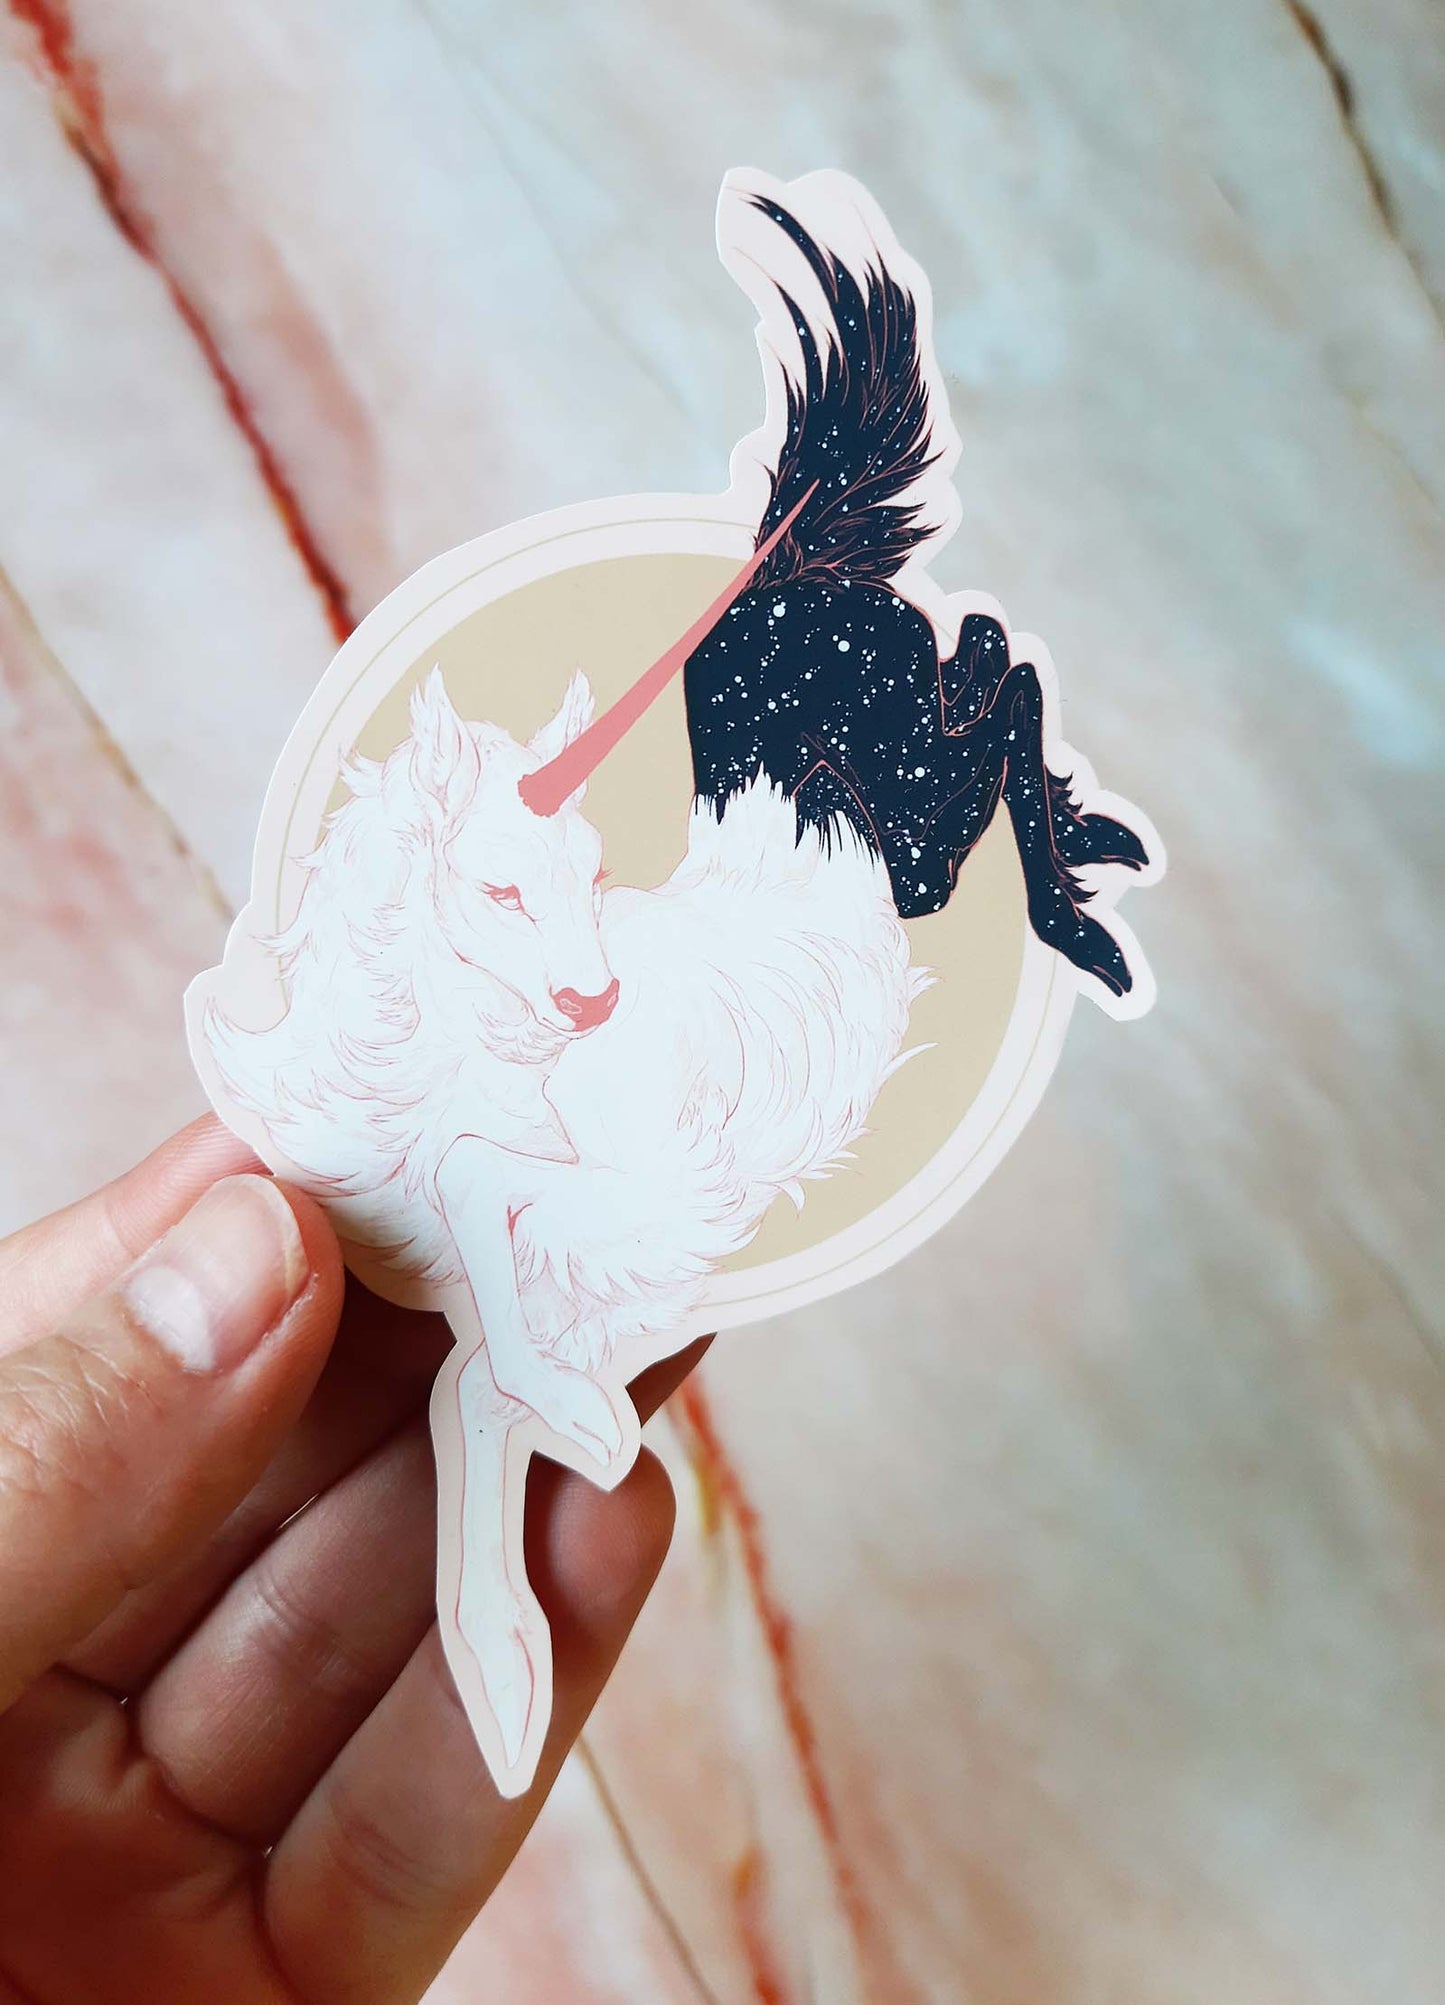 Sticker "Unicorn" by Gren Art